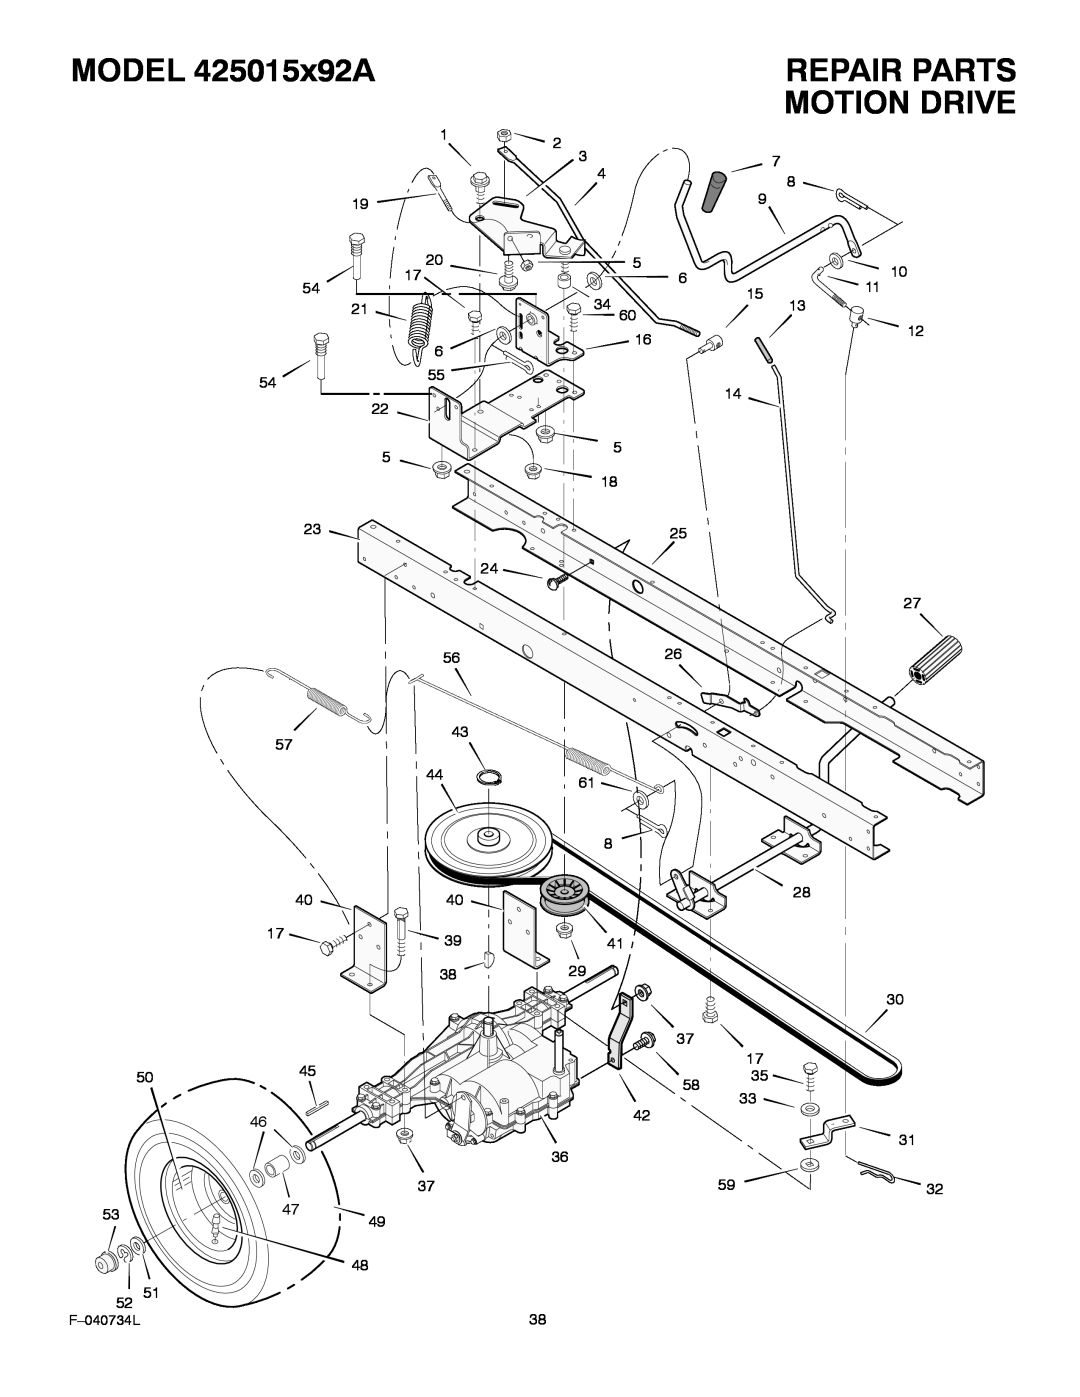 Murray manual Motion Drive, MODEL 425015x92A, Repair Parts 